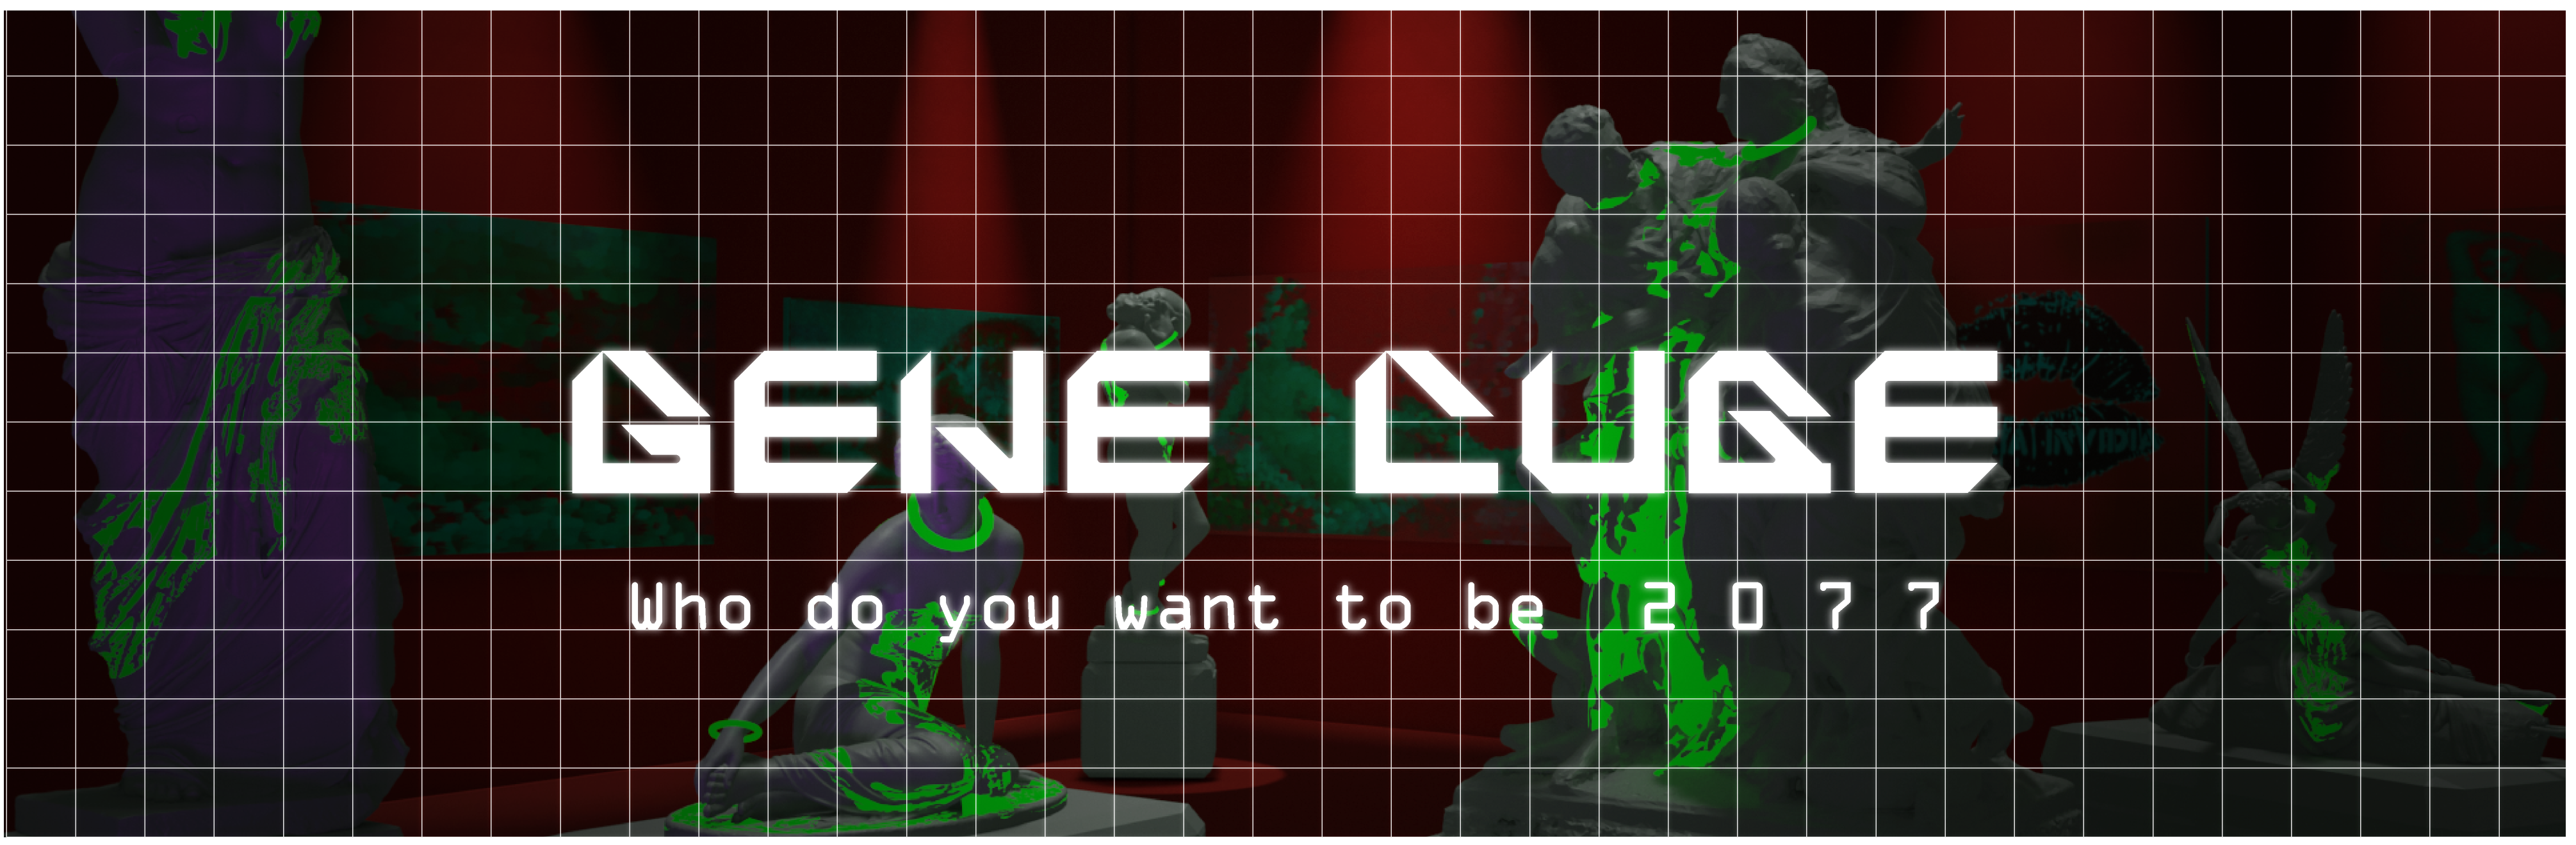 Gene Cube